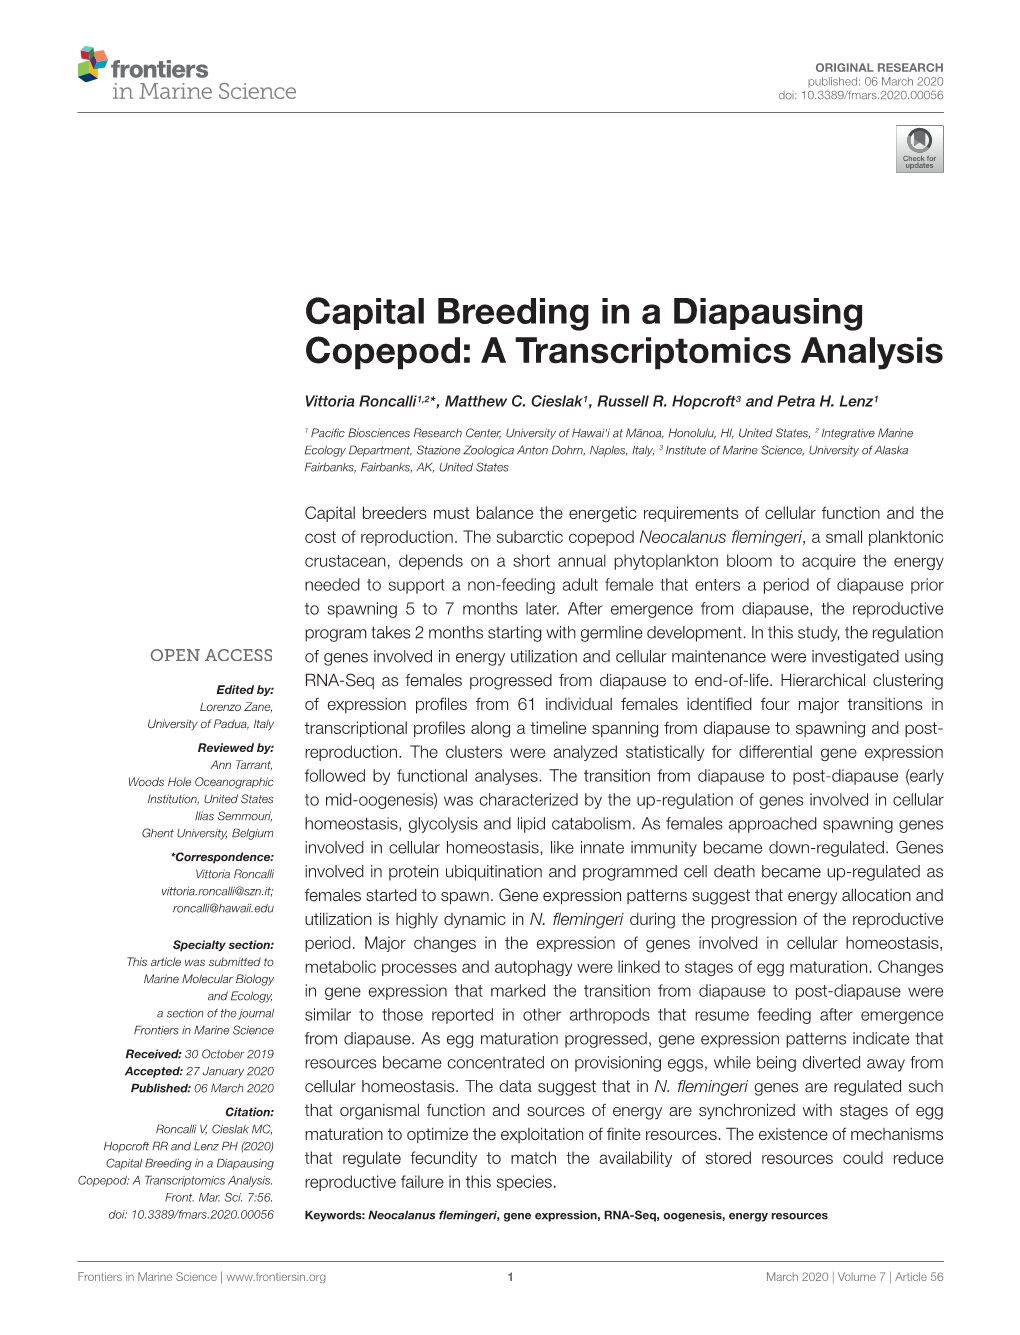 Capital Breeding in a Diapausing Copepod: a Transcriptomics Analysis